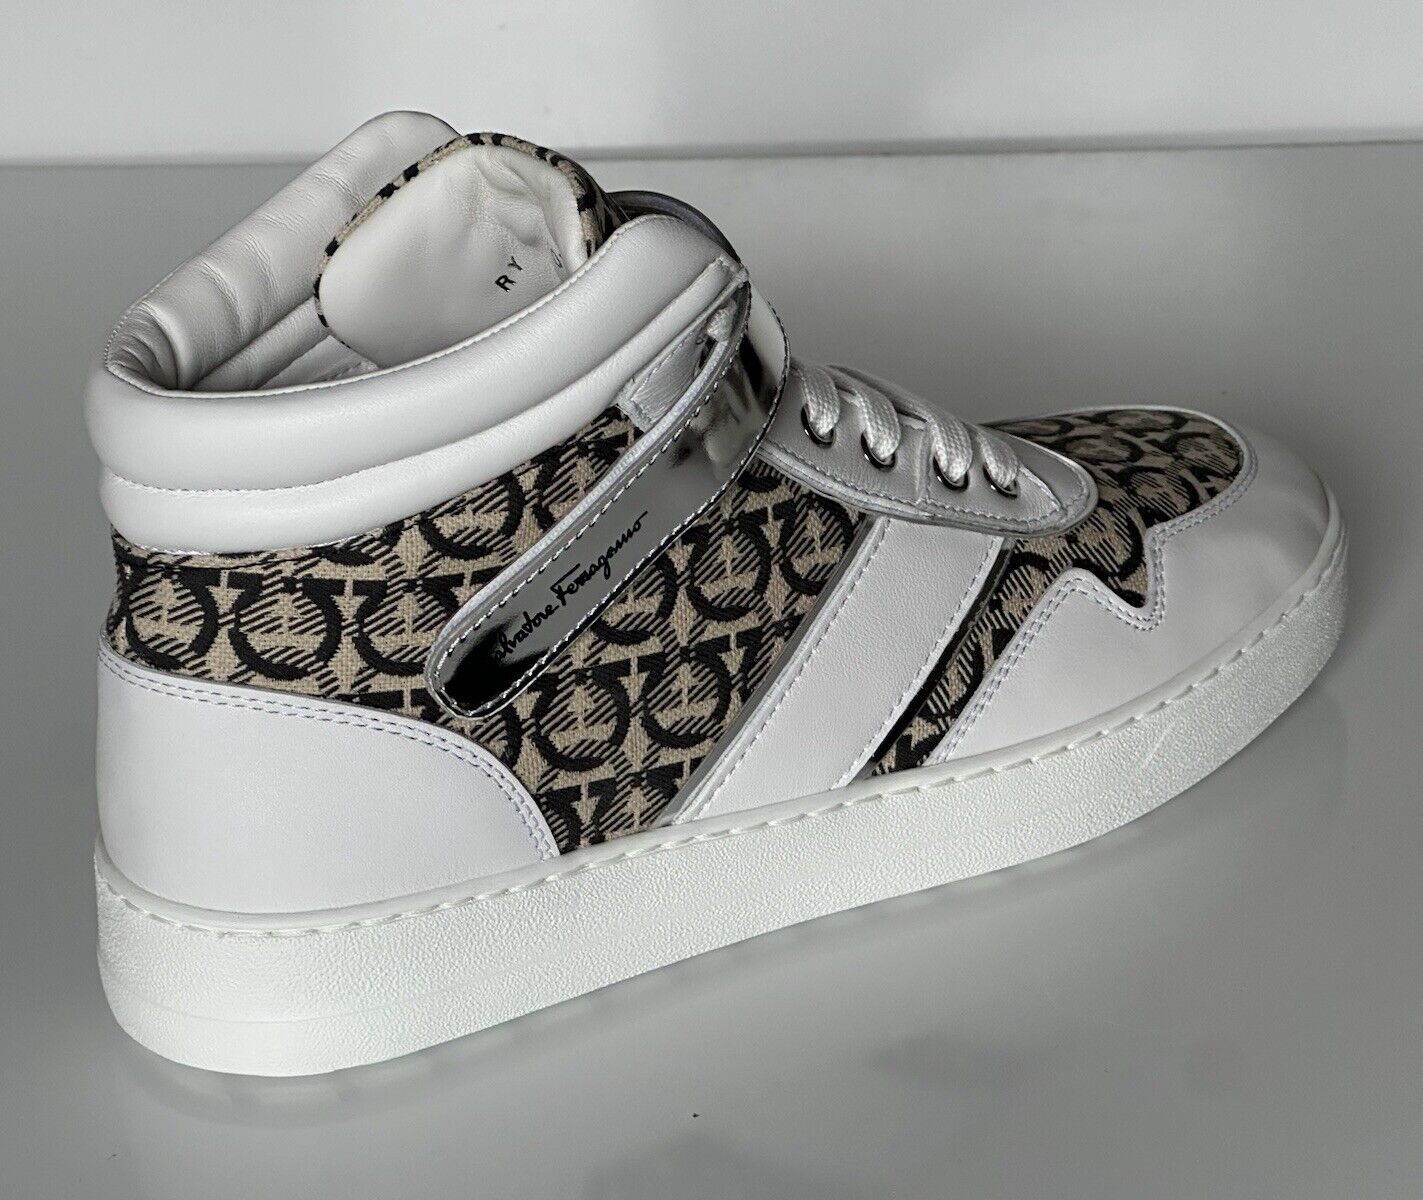 NIB Salvatore Ferragamo High Top Sneakers White/Beige Size 11 US 0751247 Italy